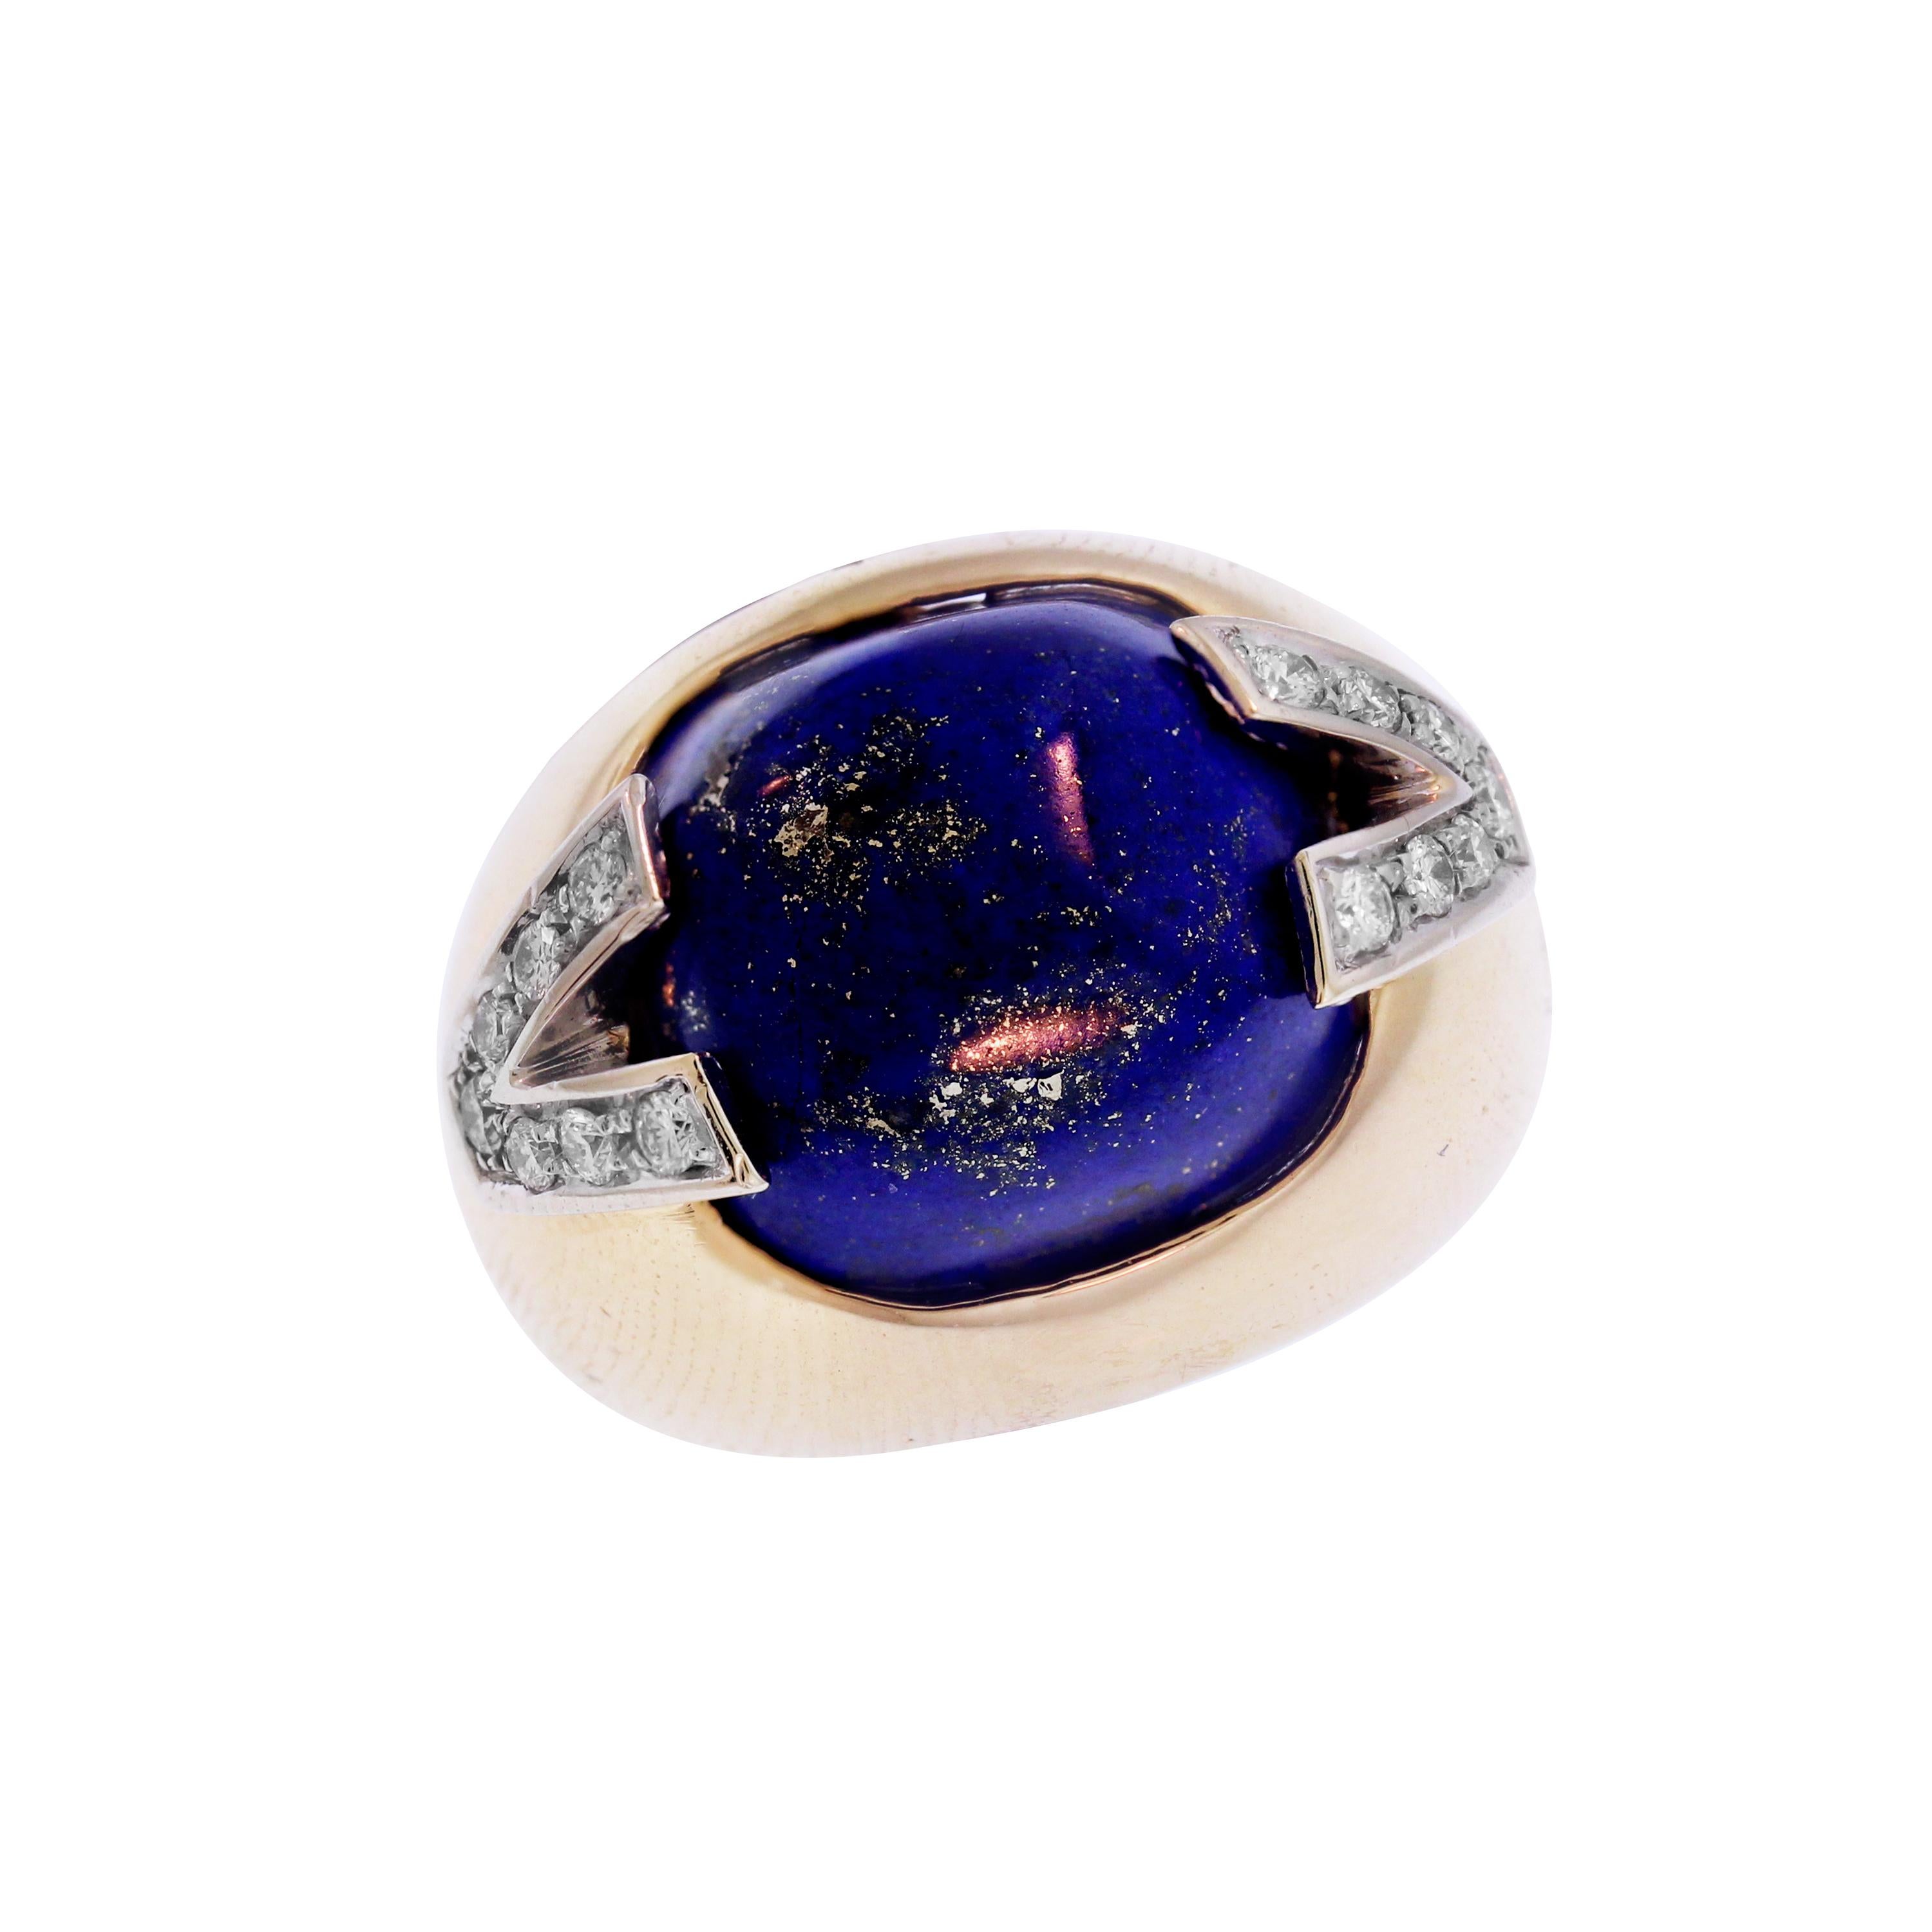 Women's Versace Yellow Gold and Diamond Ring with Lapis Lazuli Center